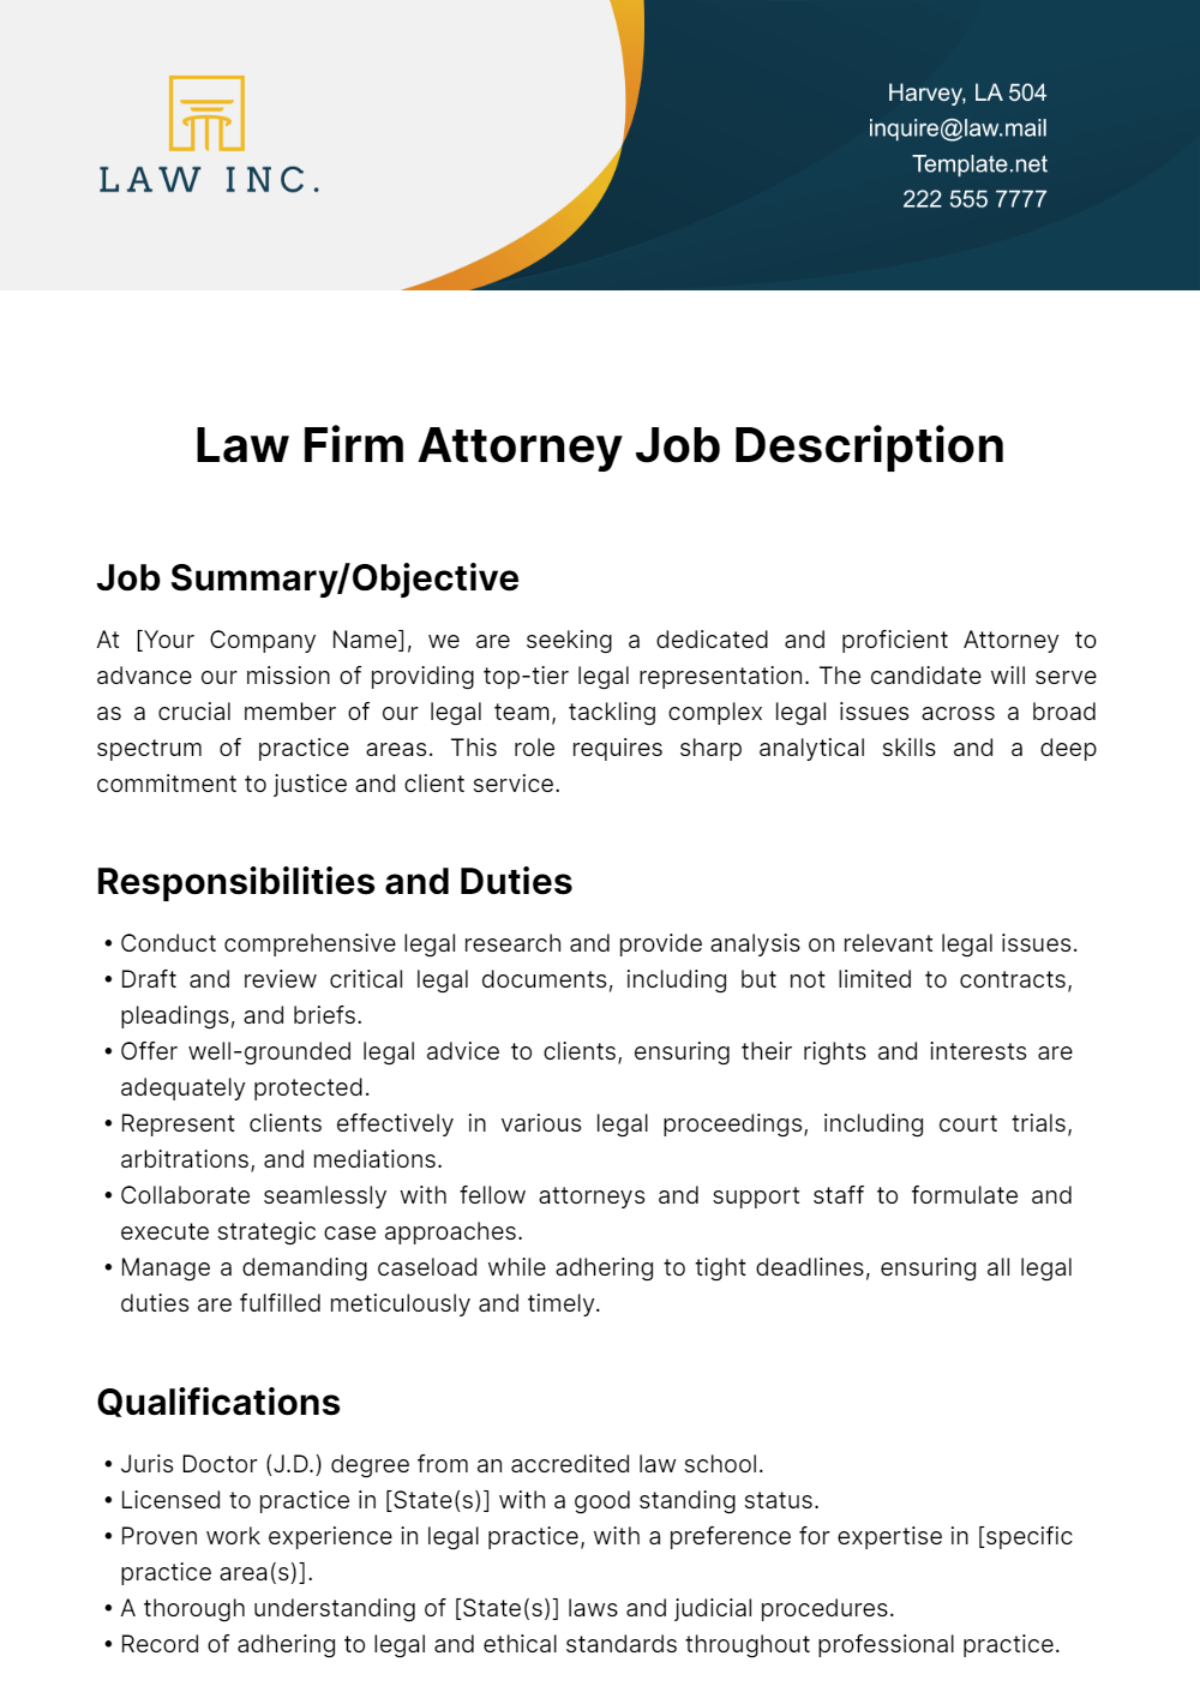 Law Firm Attorney Job Description Template